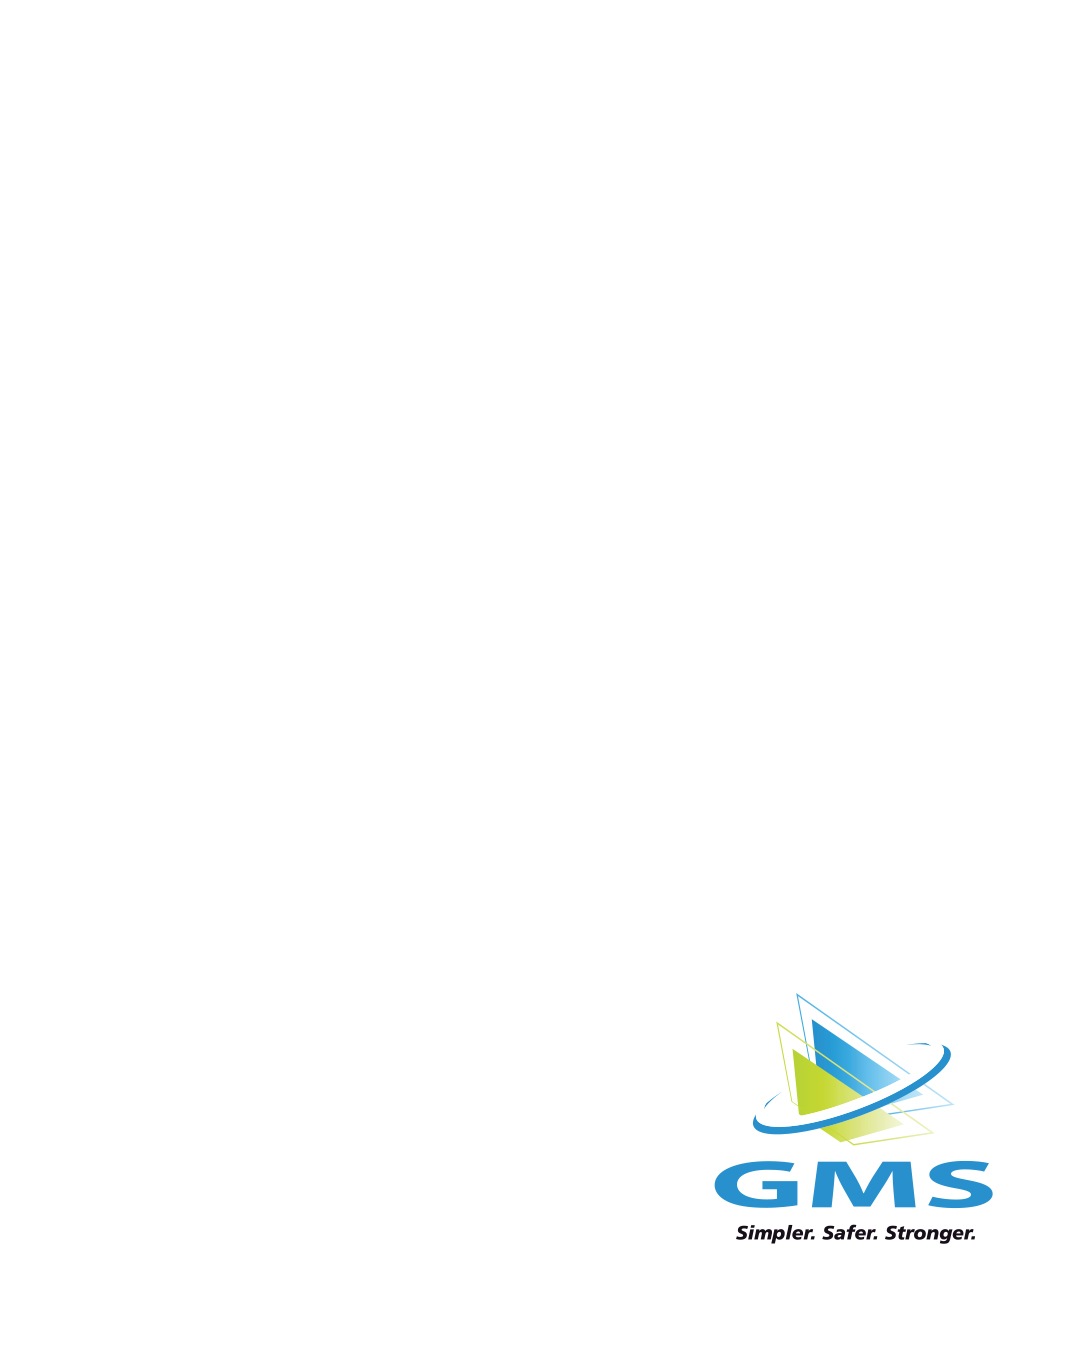 GMS Employee Login | GMS Connect | GMS